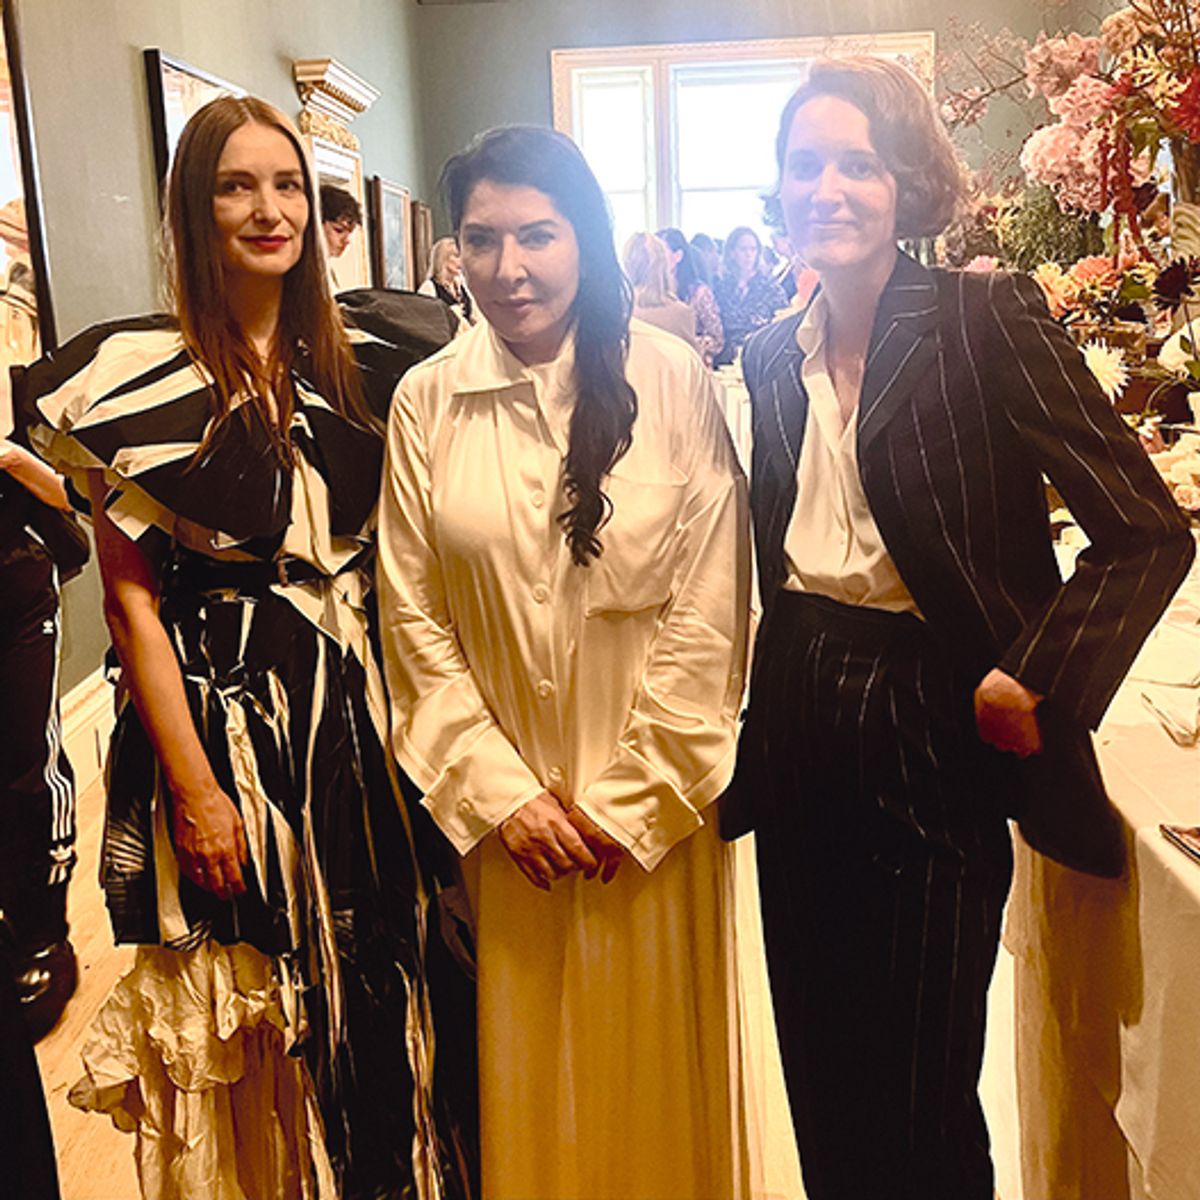 From left: Roksanda Ilinic, Marina Abramovic and Phoebe Waller Bridge at the RA event

Photo: Louisa Buck